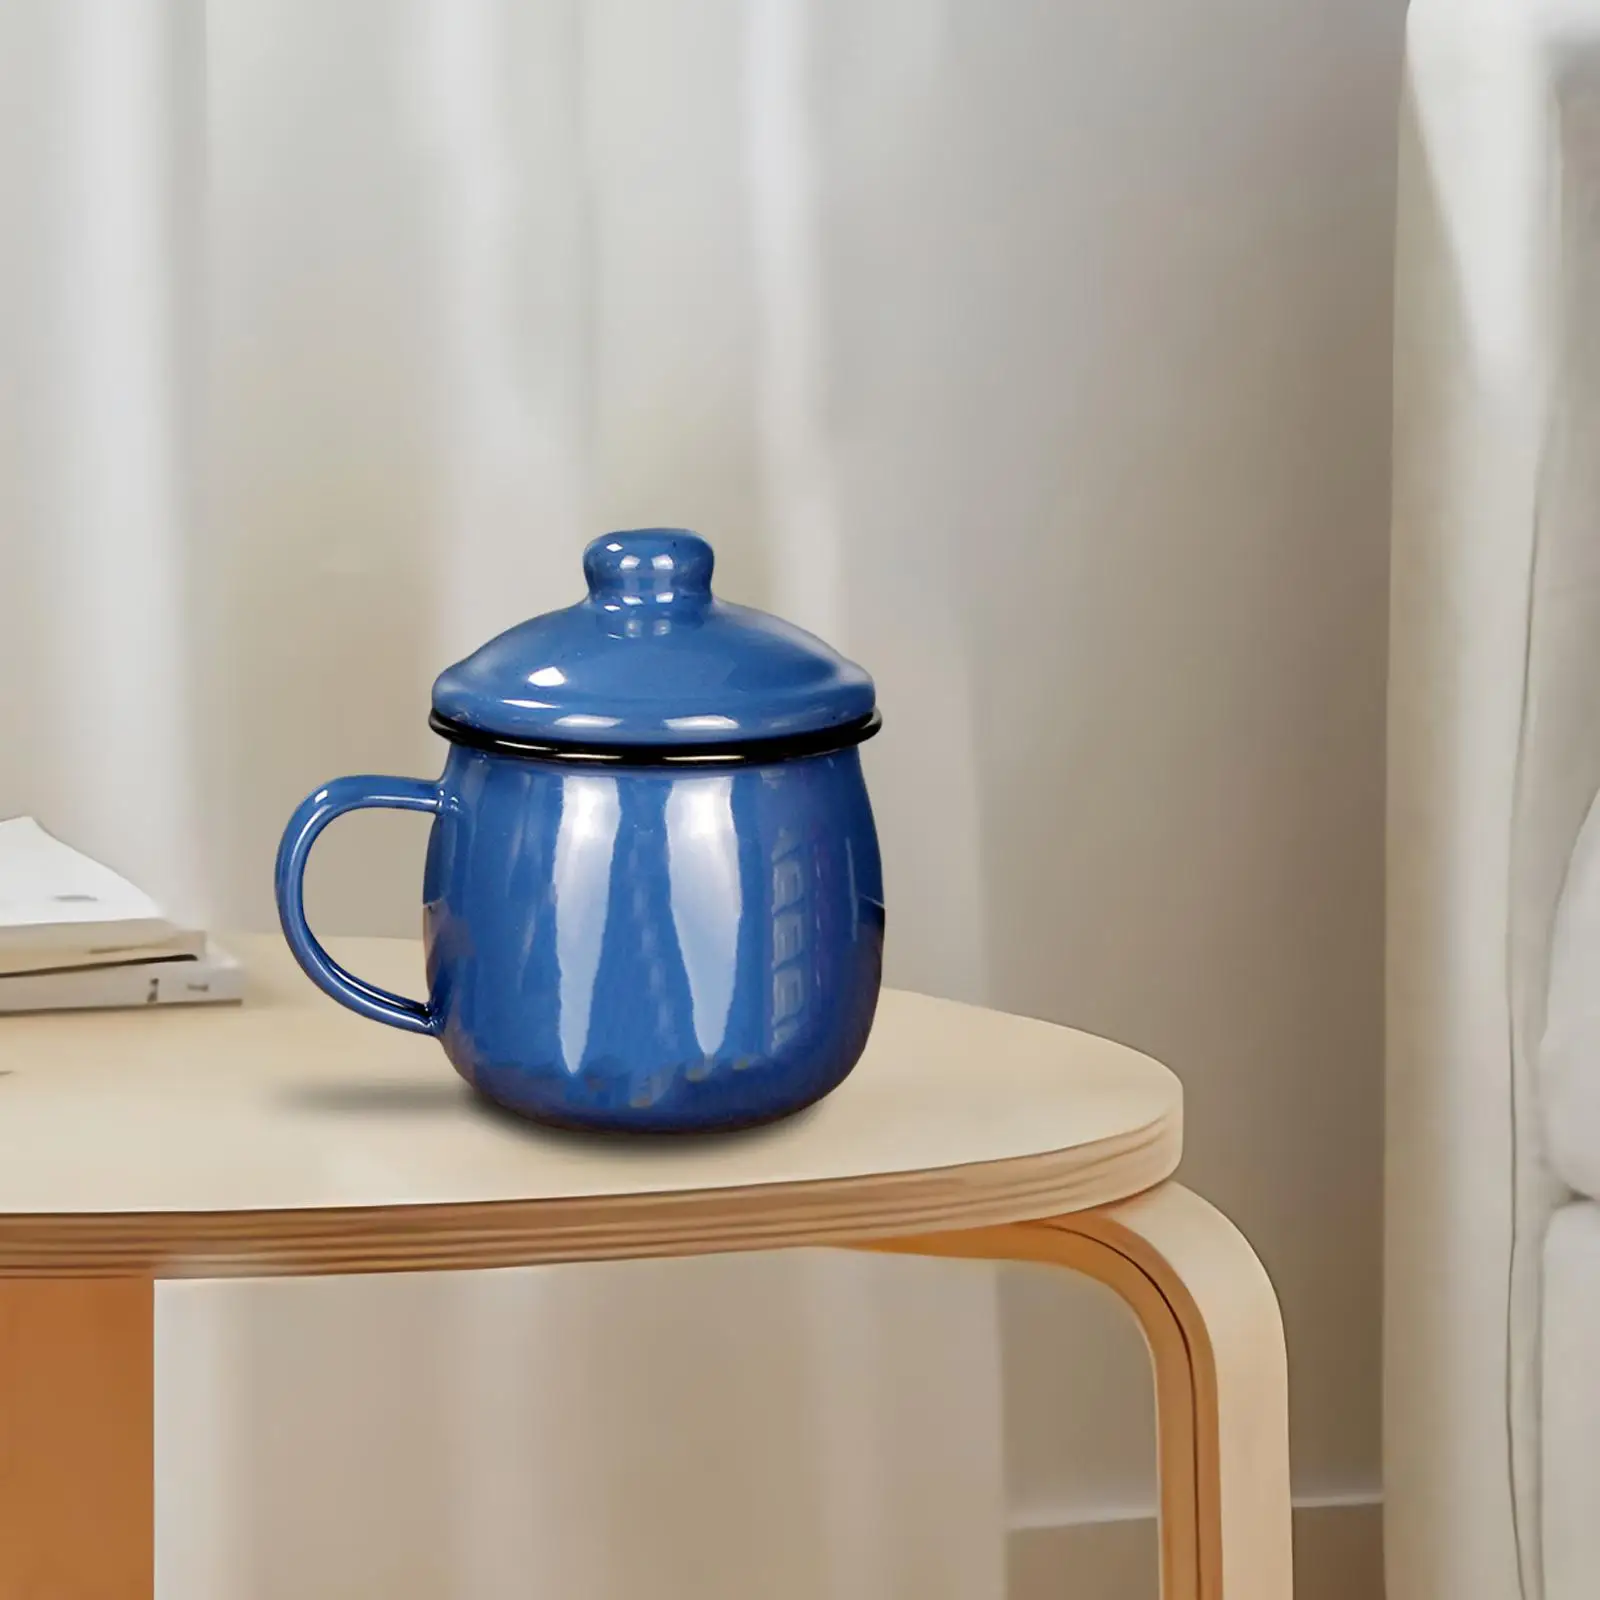 Handmade Enamel Mug with Handle Camping Mug Enamelware Juice Cup Coffee Mug Cup for Office Dining Room Picnic Home